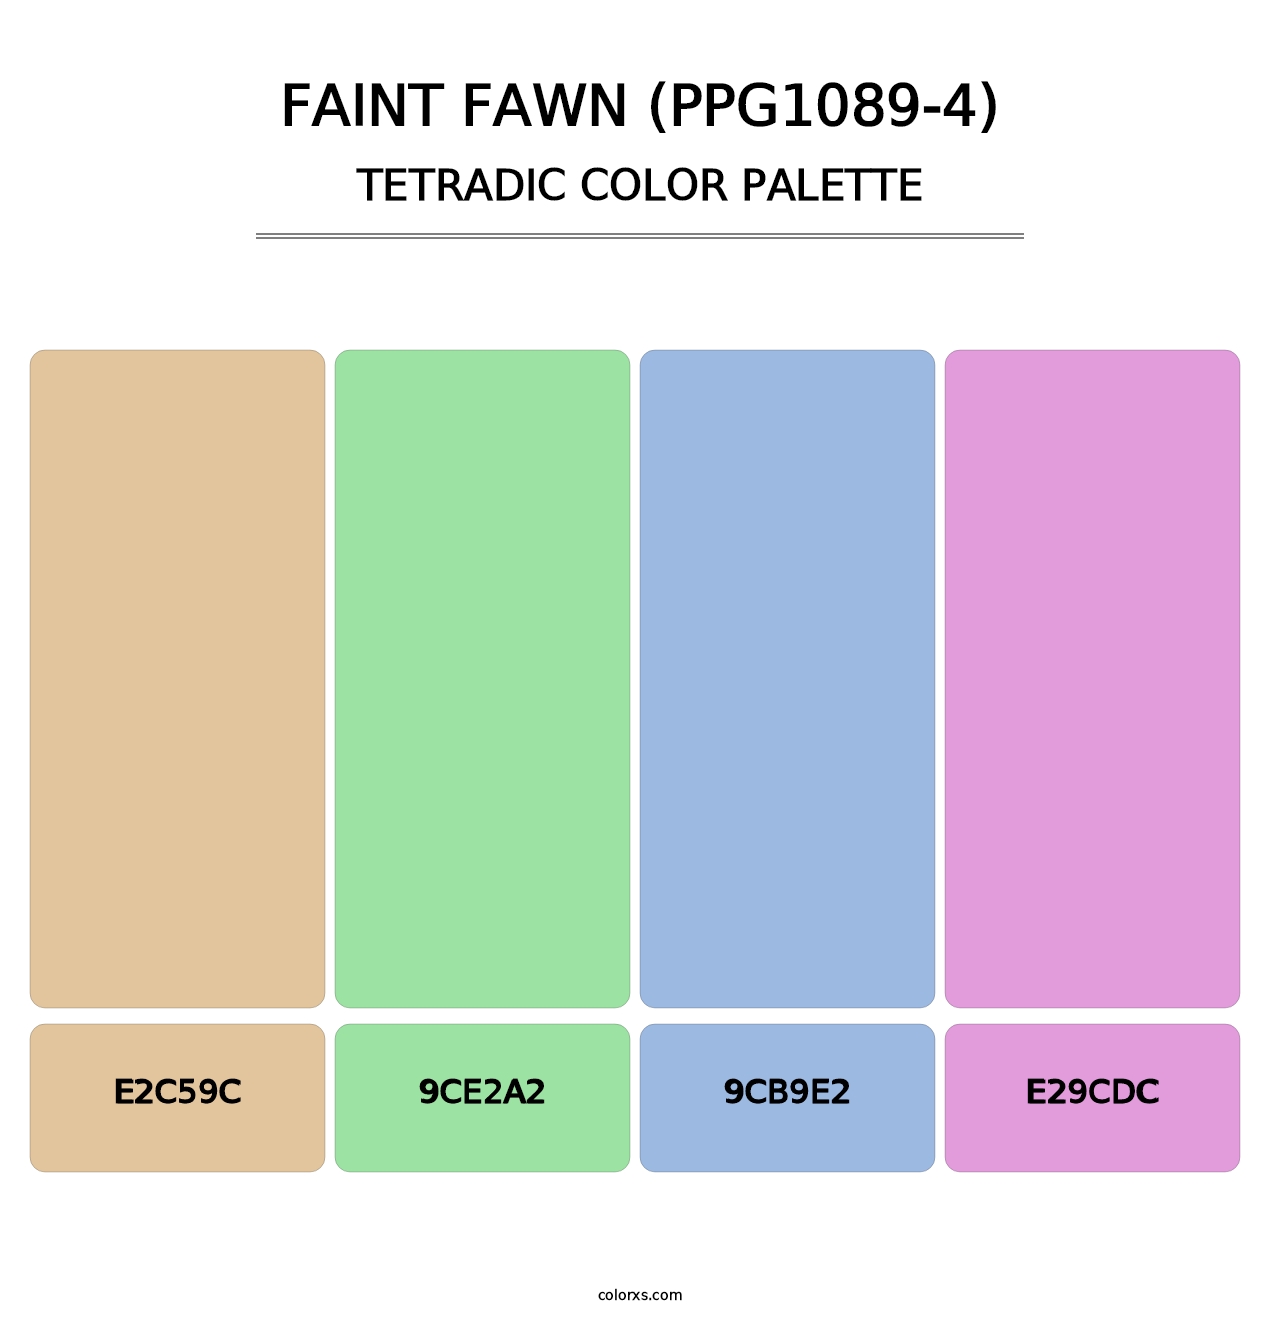 Faint Fawn (PPG1089-4) - Tetradic Color Palette